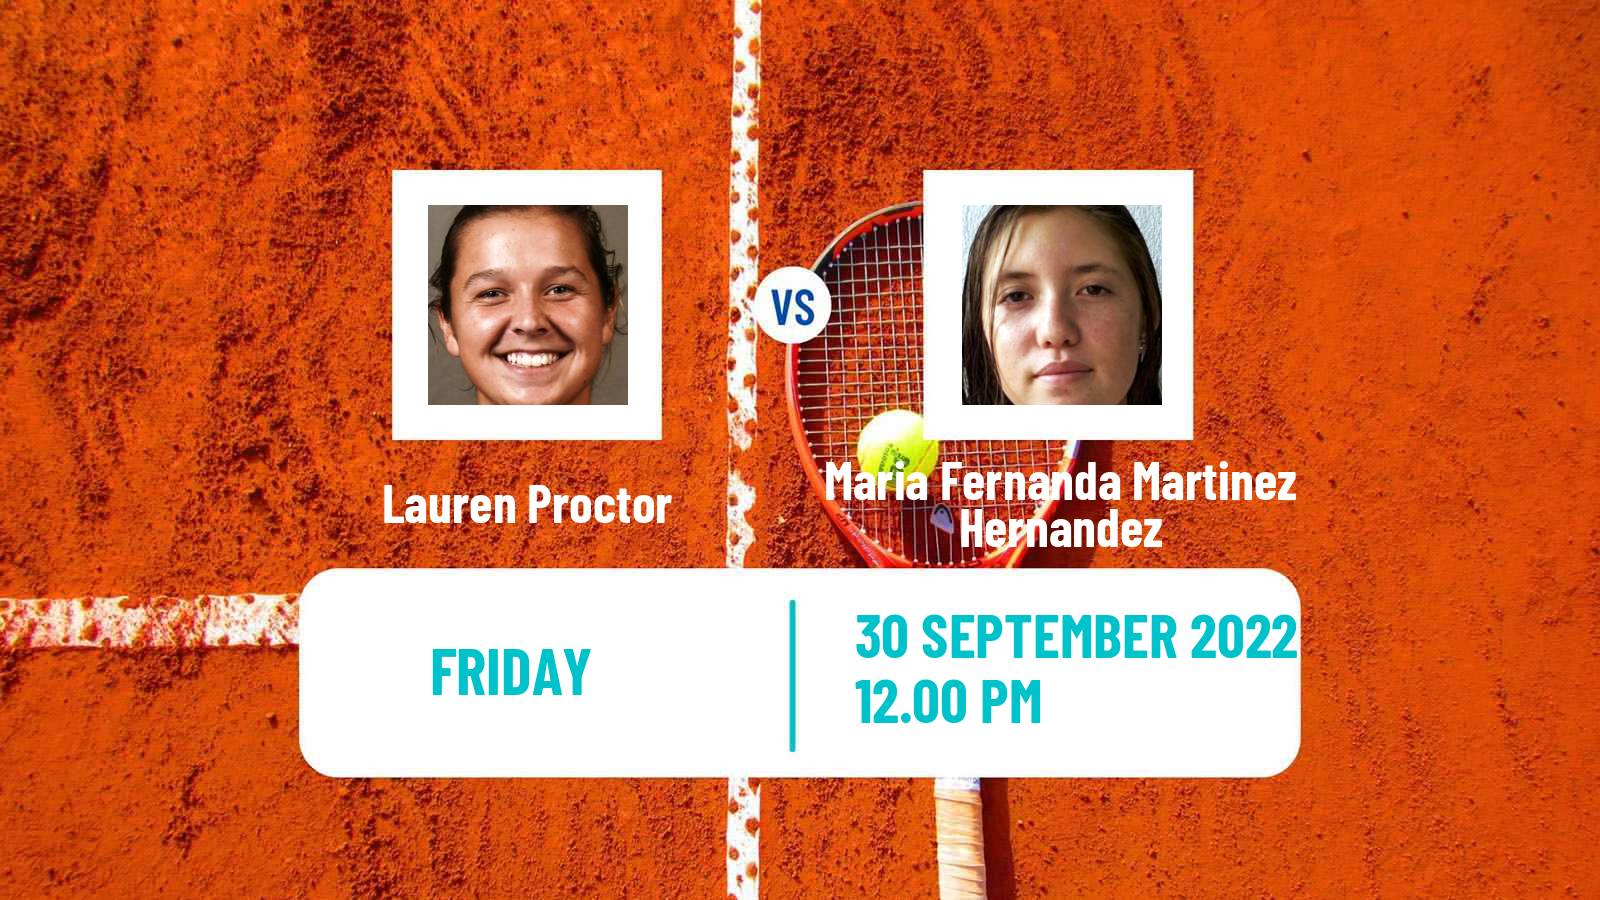 Tennis ITF Tournaments Lauren Proctor - Maria Fernanda Martinez Hernandez